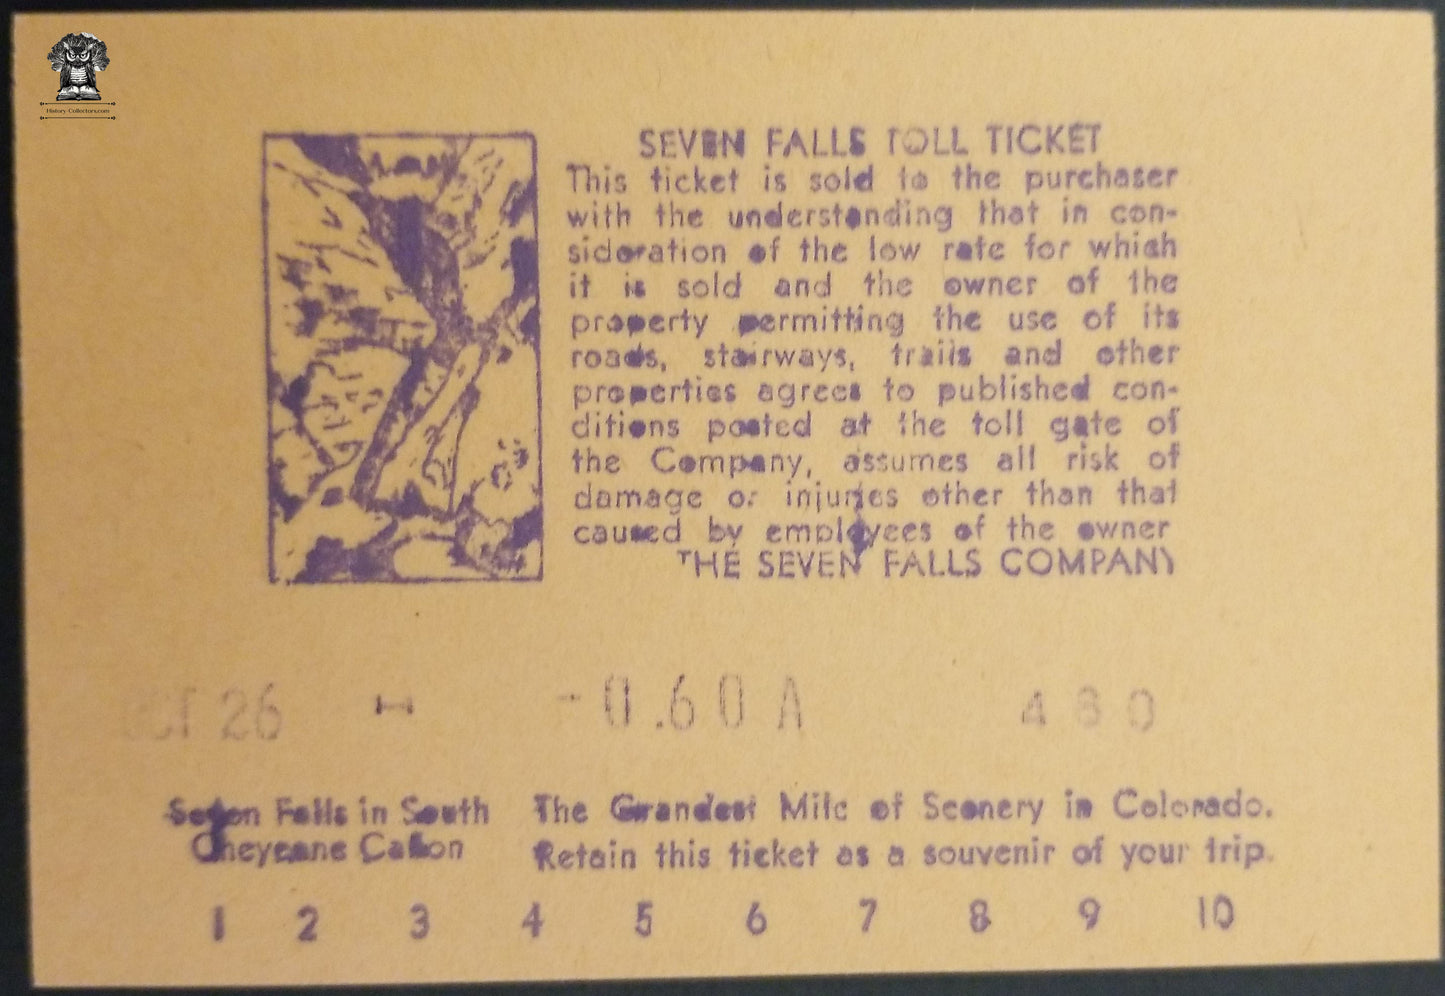 Vintage Seven Falls Toll Entry Ticket - Colorado Cheyenne Canyon Broadmoor Range